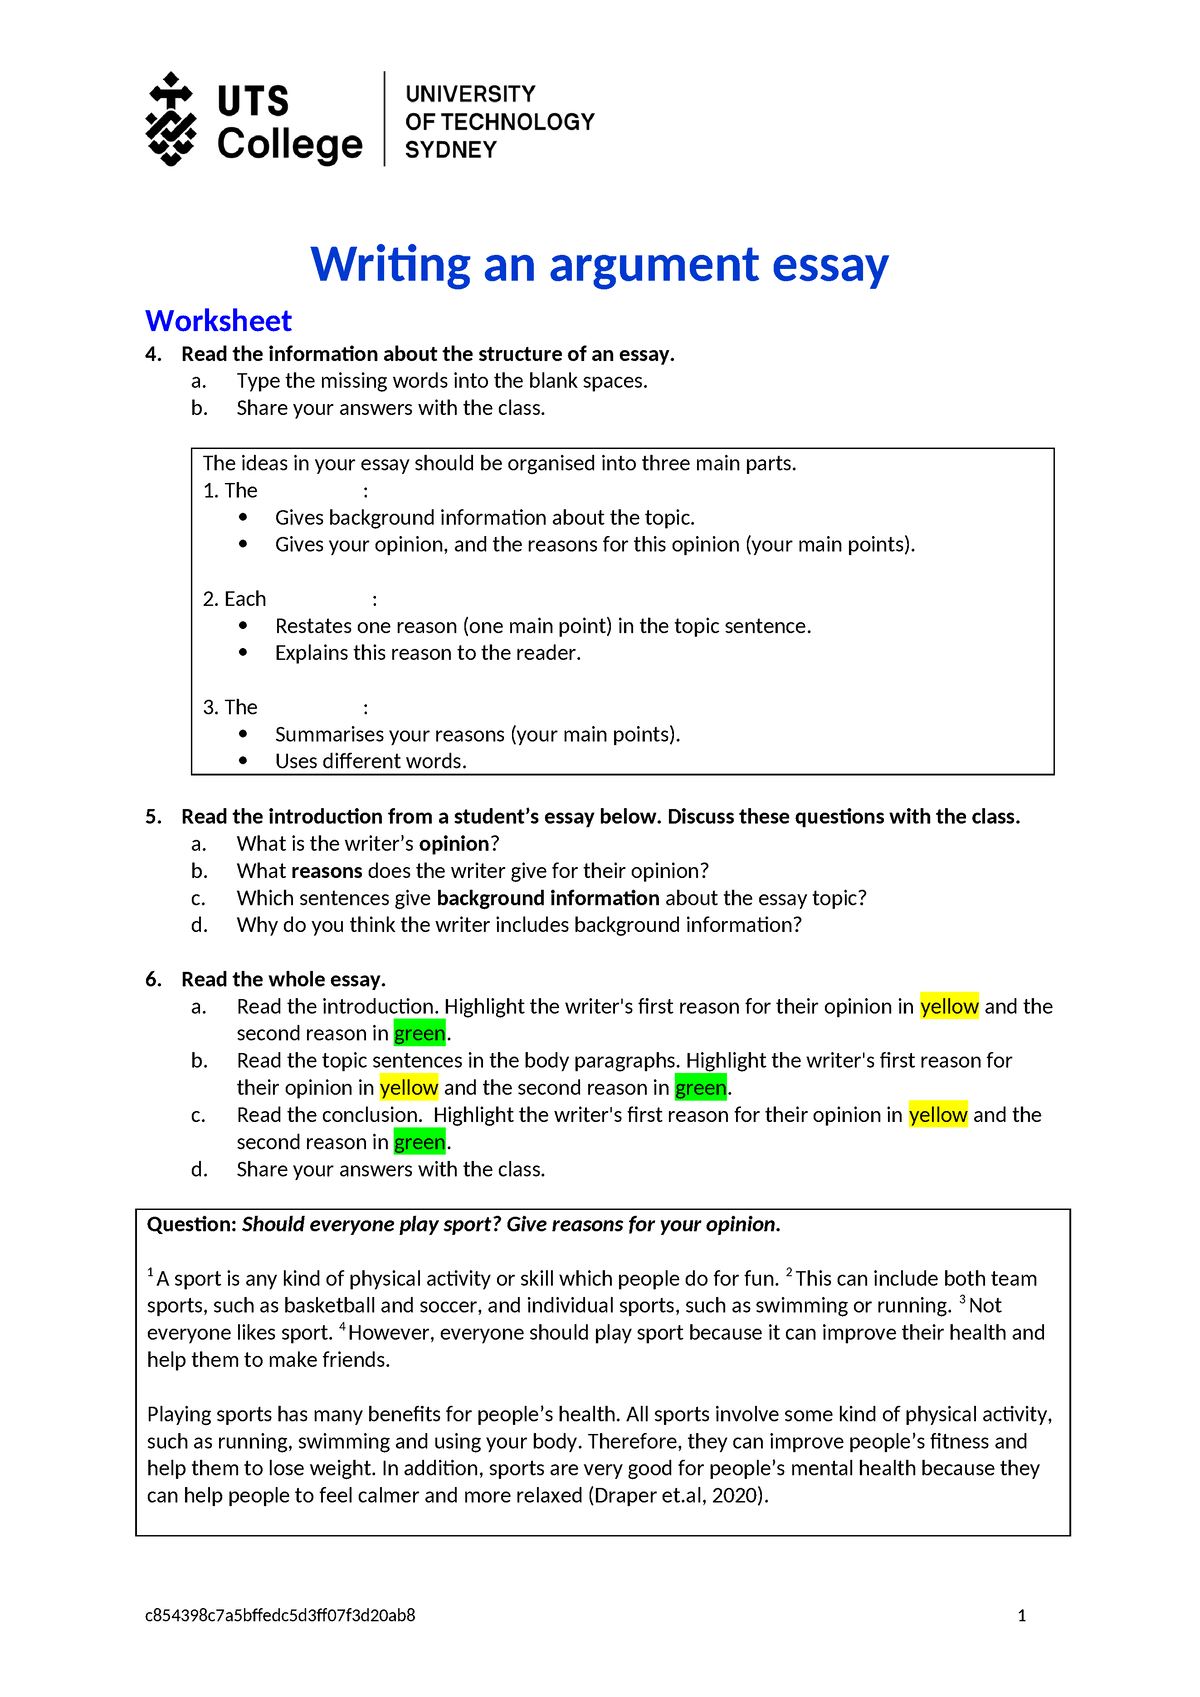 Writing an argument essay 1 - Worksheet - Writing an argument essay ...